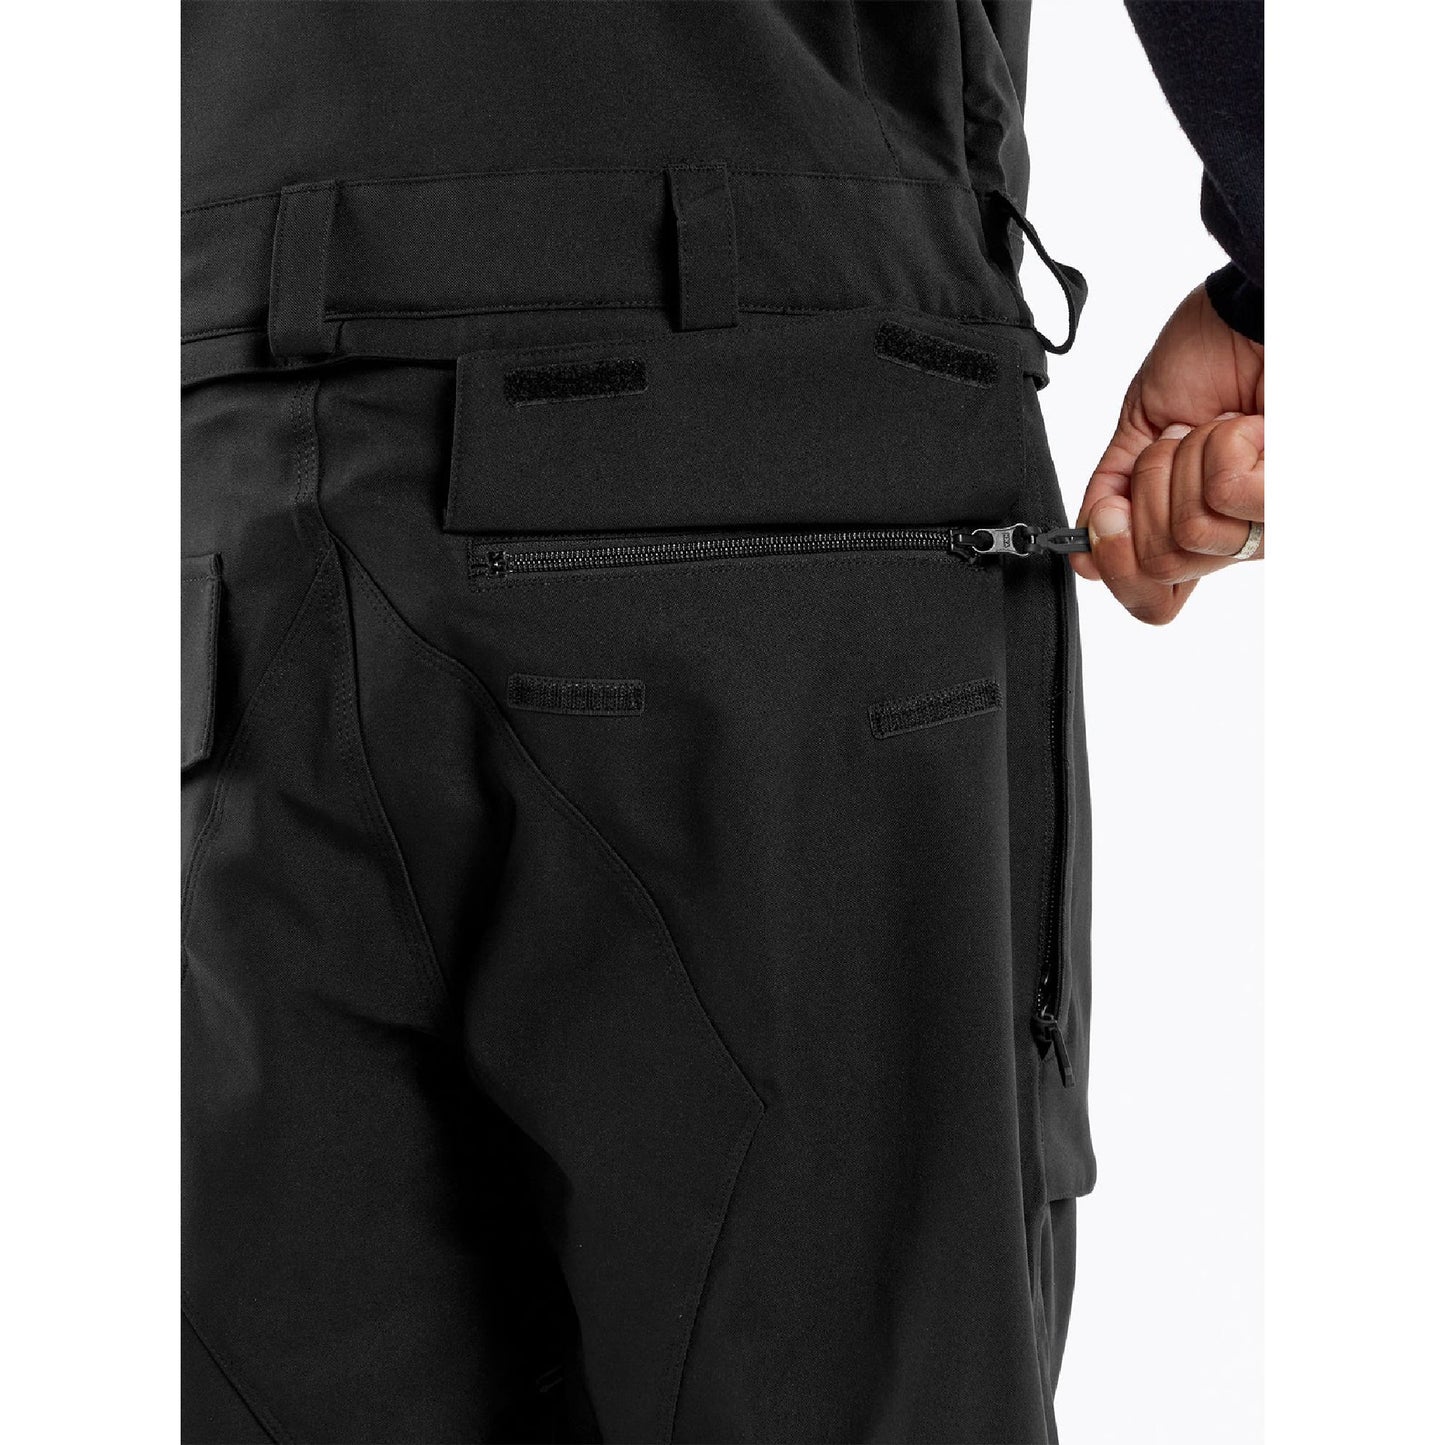 Volcom Roan Bib Overall Black Snow Pants